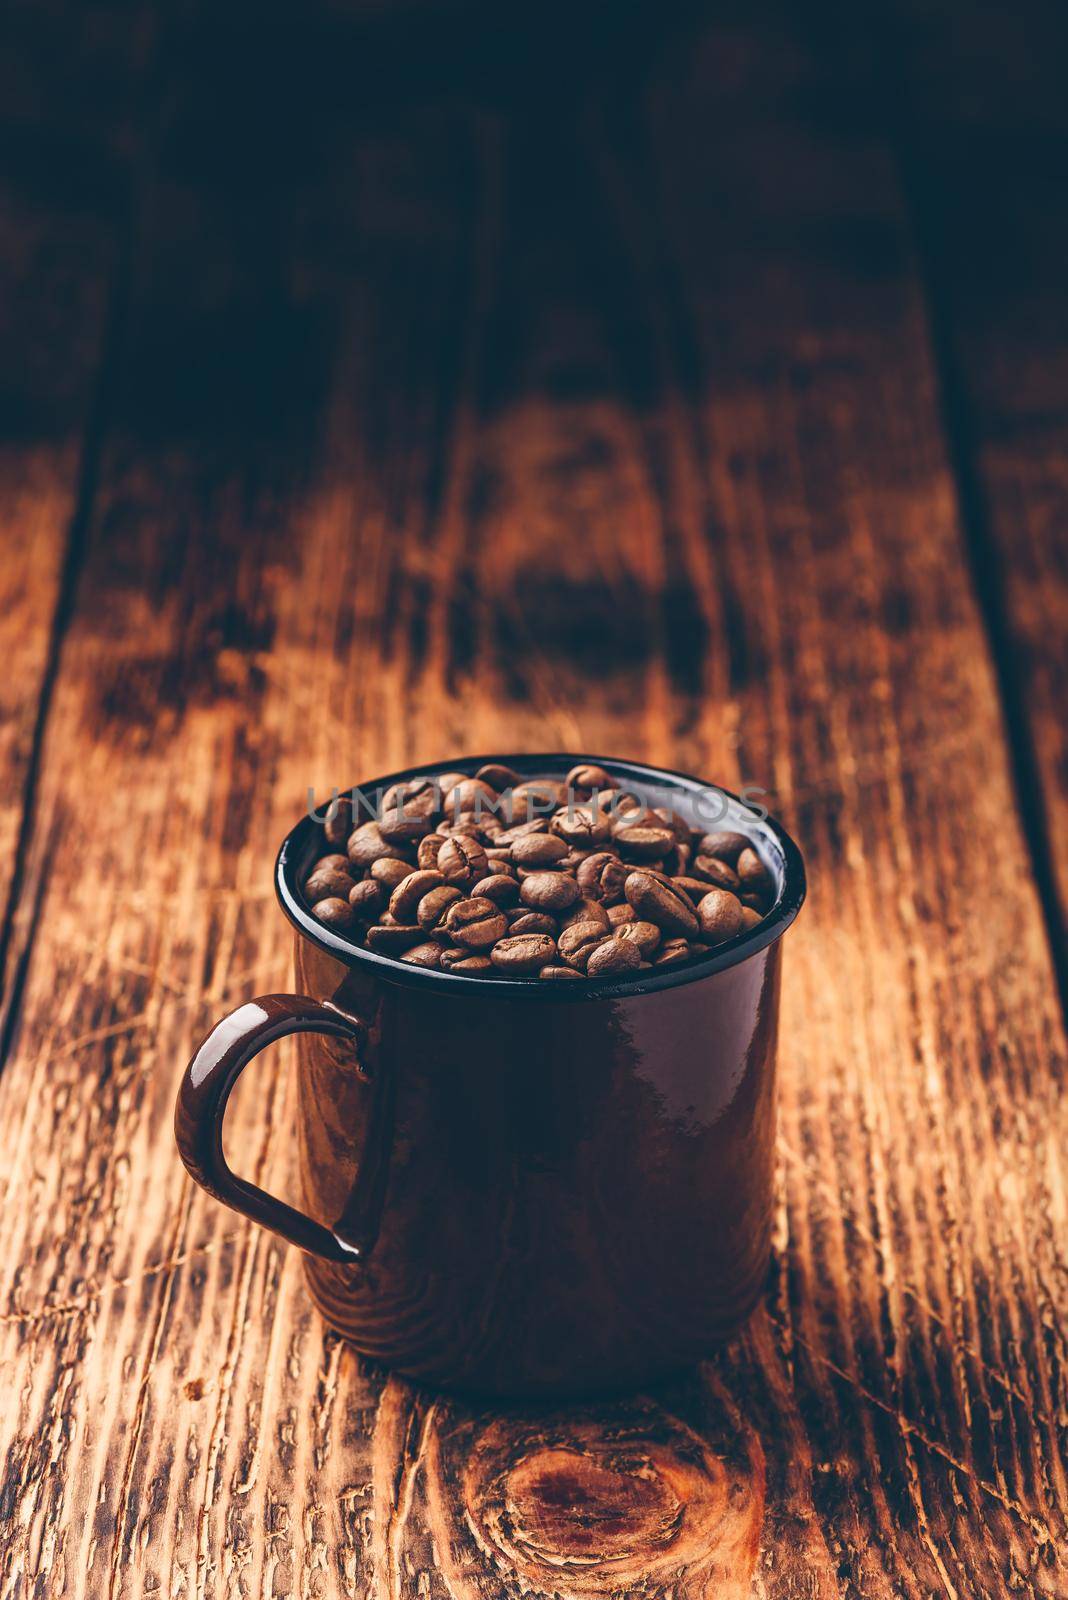 Mug full of roasted coffee beans by Seva_blsv